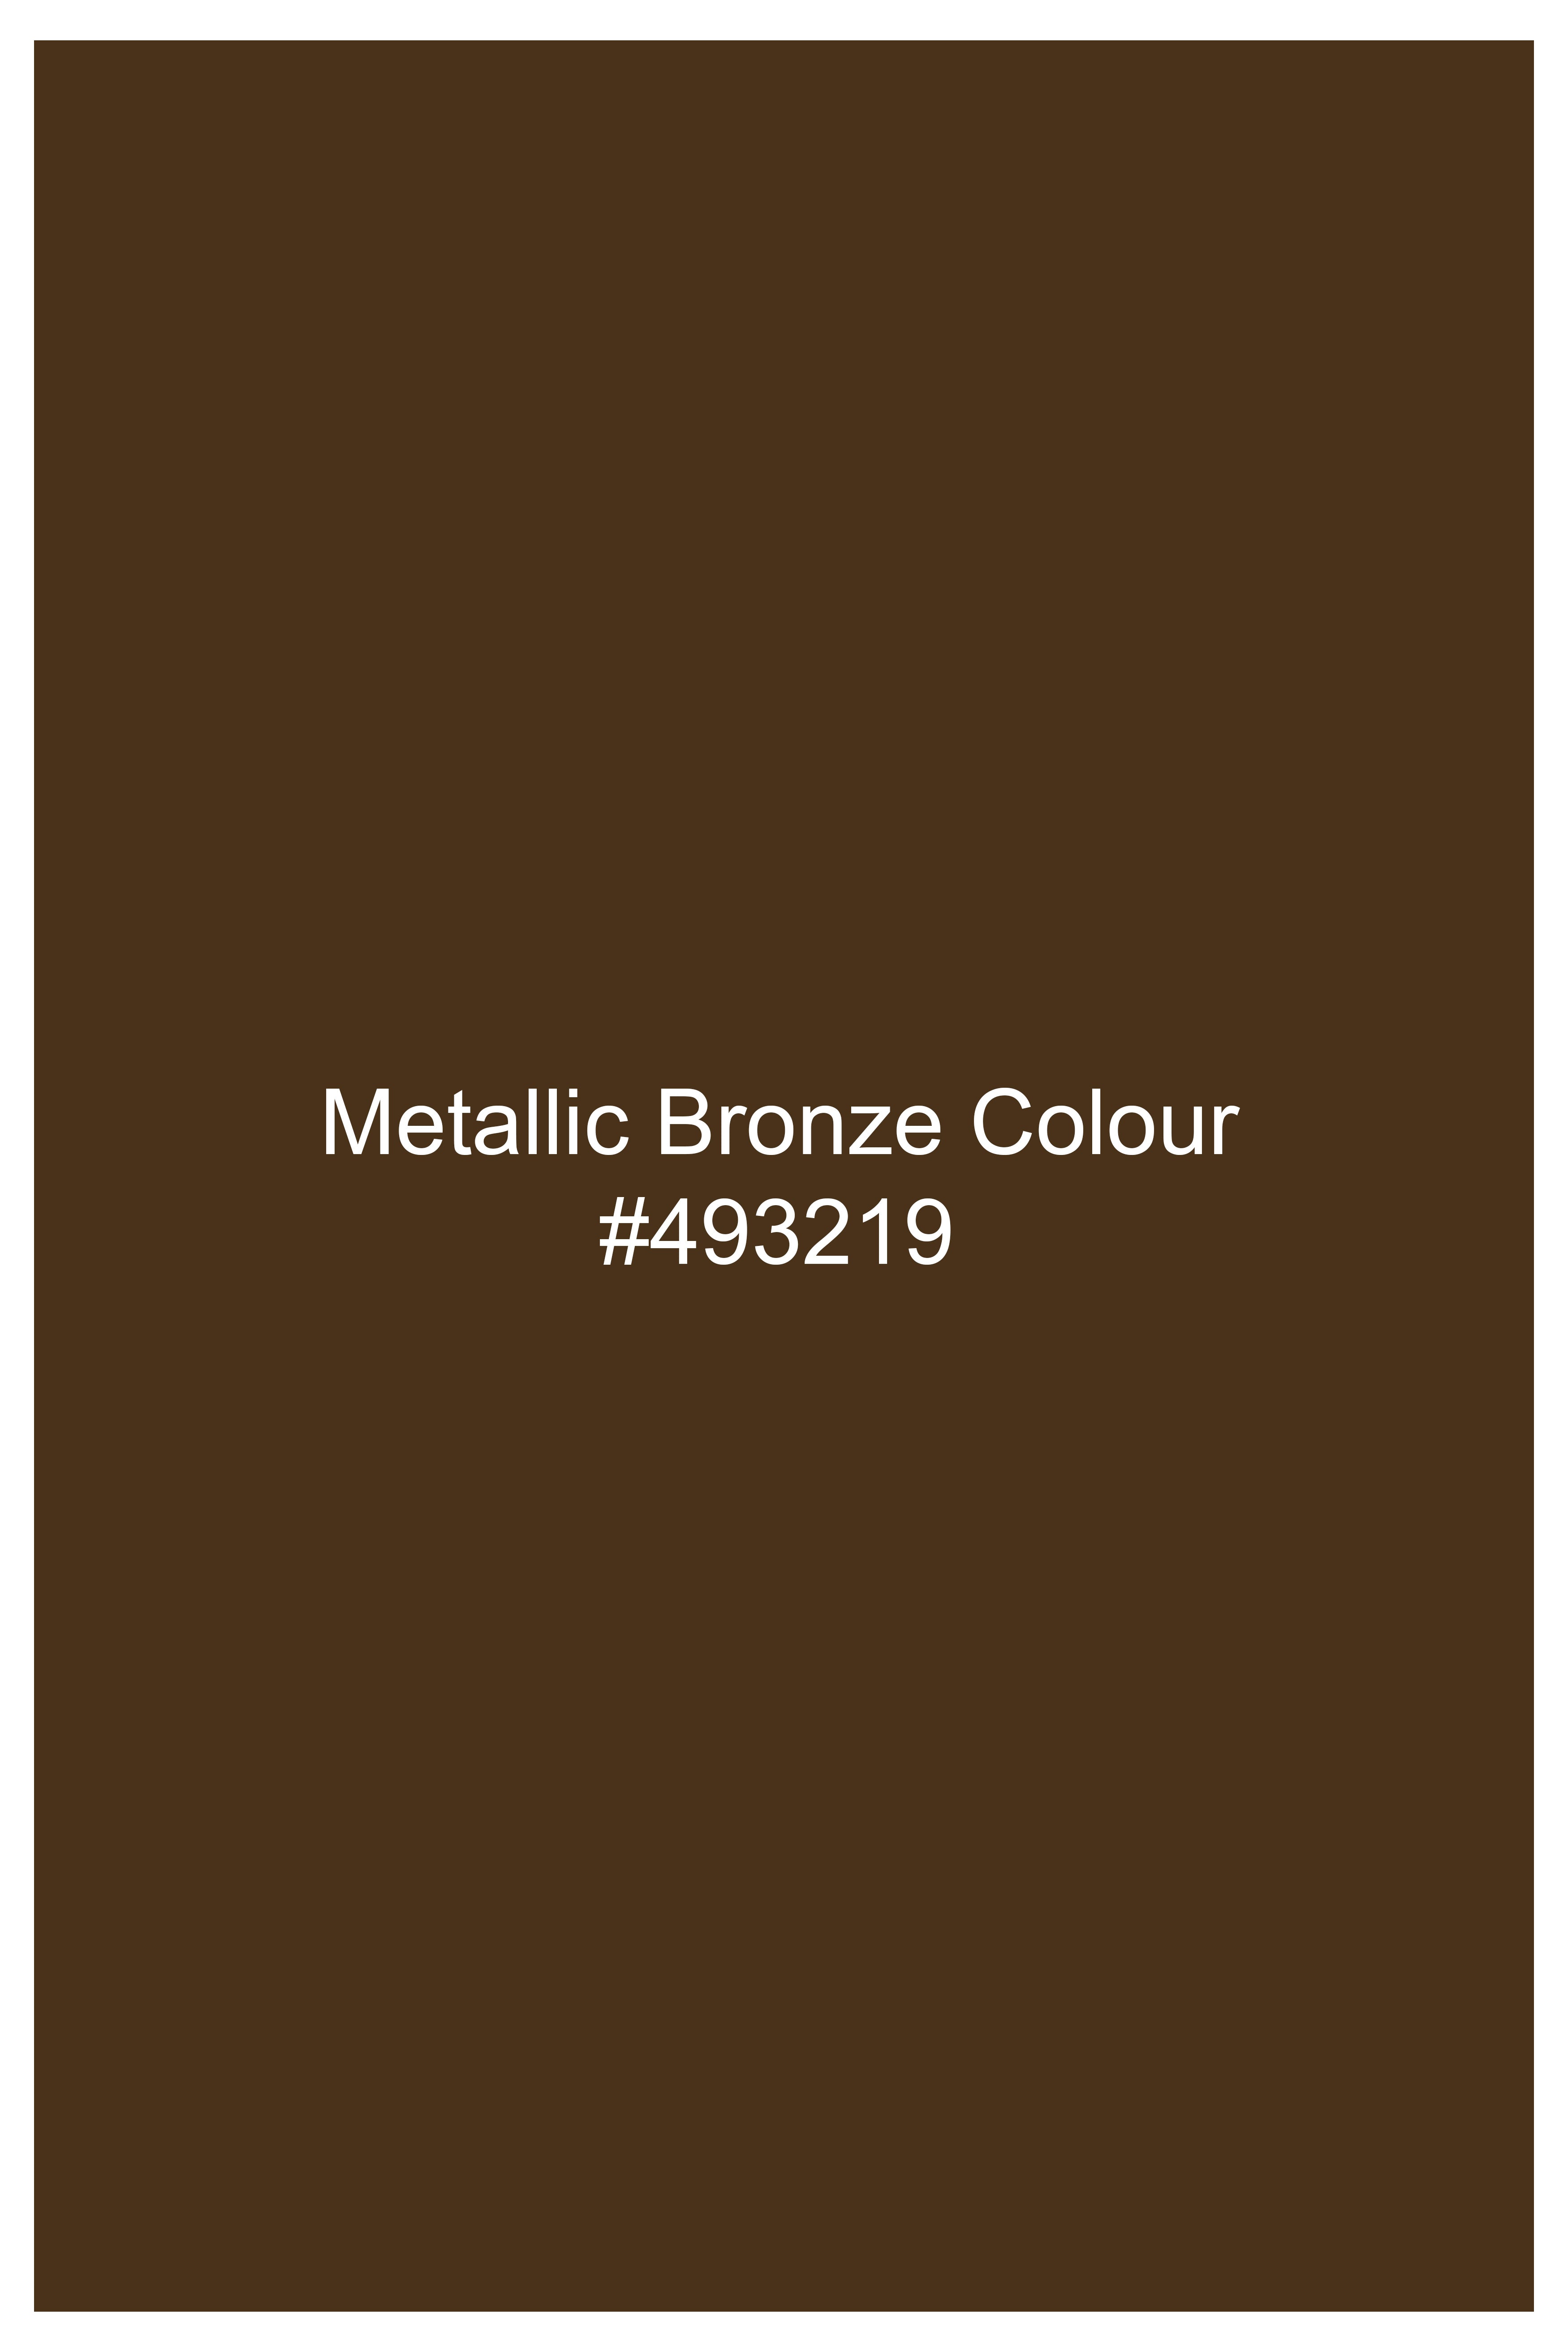 Metallic Bronze Brown Premium Cotton Tuxedo Stretchable Traveler Blazer BL2782-BKL-36, BL2782-BKL-38, BL2782-BKL-40, BL2782-BKL-42, BL2782-BKL-44, BL2782-BKL-46, BL2782-BKL-48, BL2782-BKL-50, BL2782-BKL-52, BL2782-BKL-54, BL2782-BKL-56, BL2782-BKL-58, BL2782-BKL-60